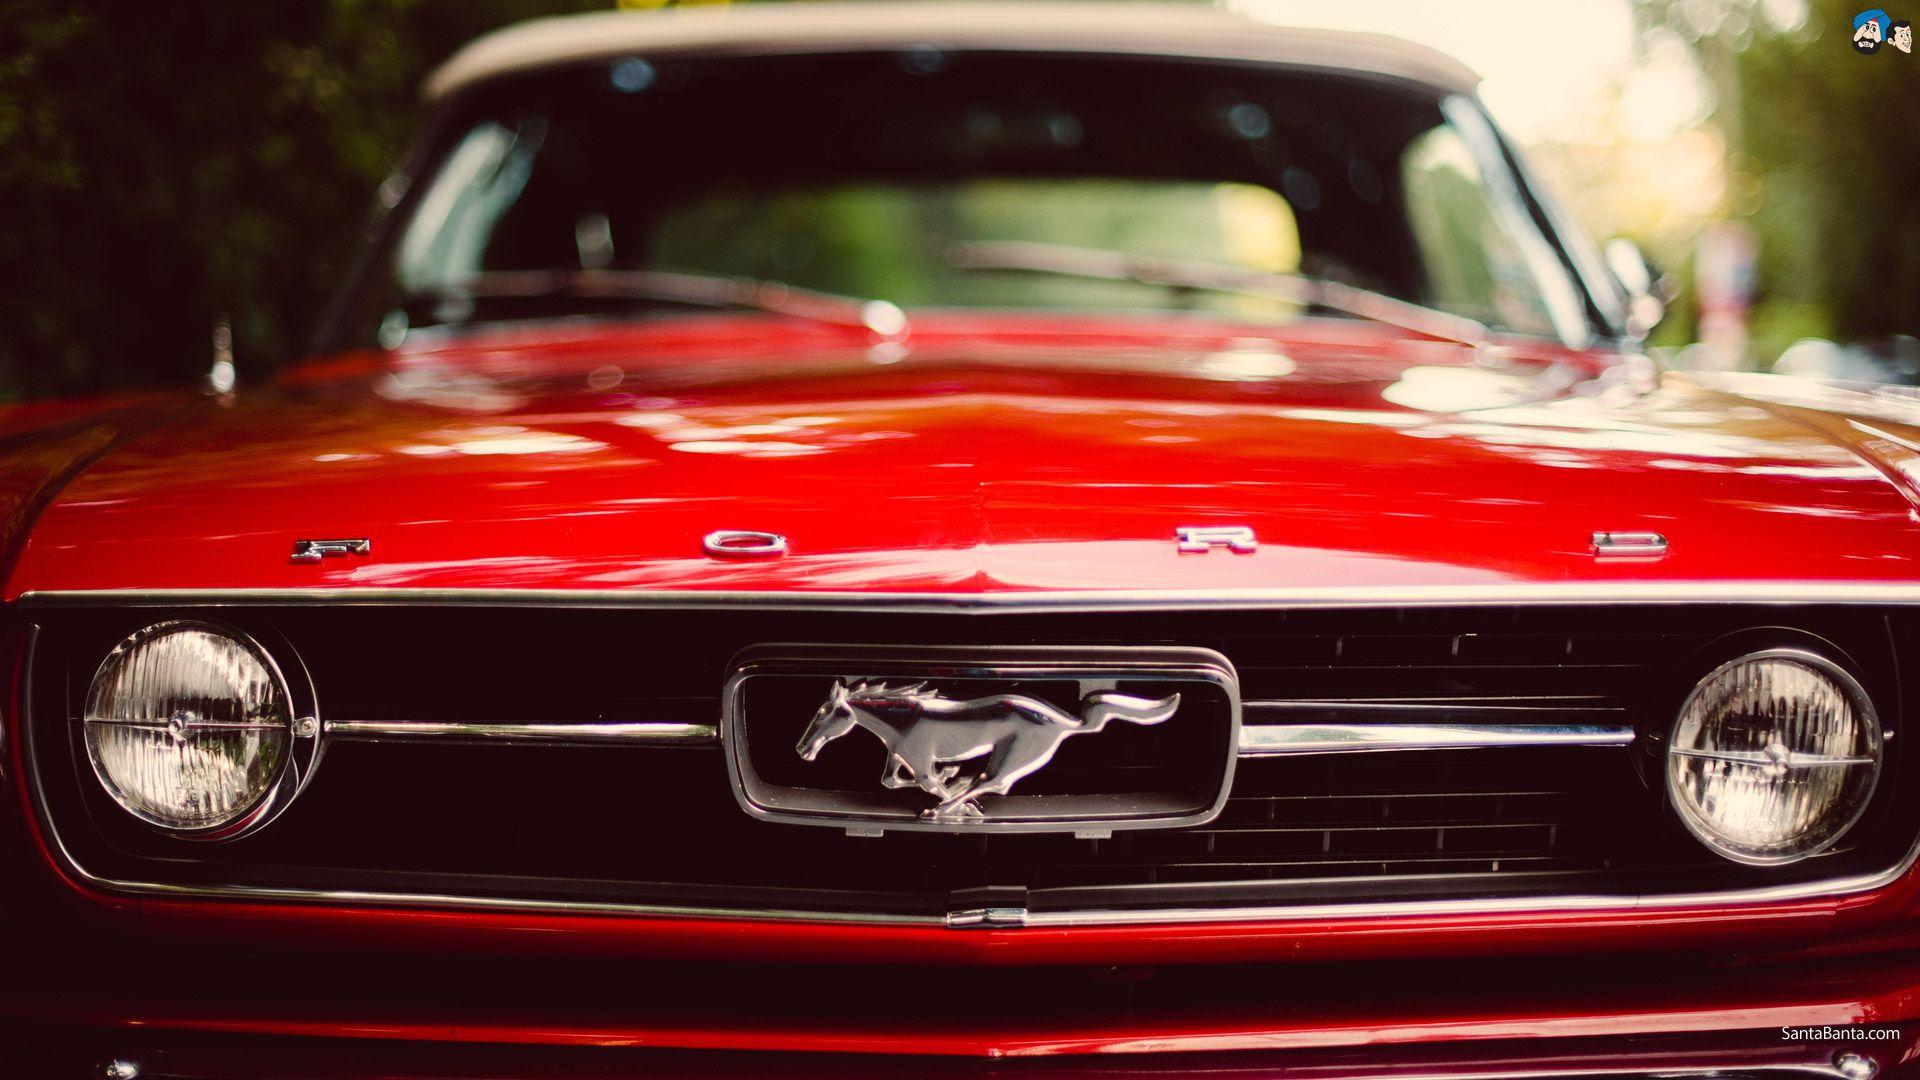 Ford Mustang Logo Wallpaper HD. Mustang. Mustang cars